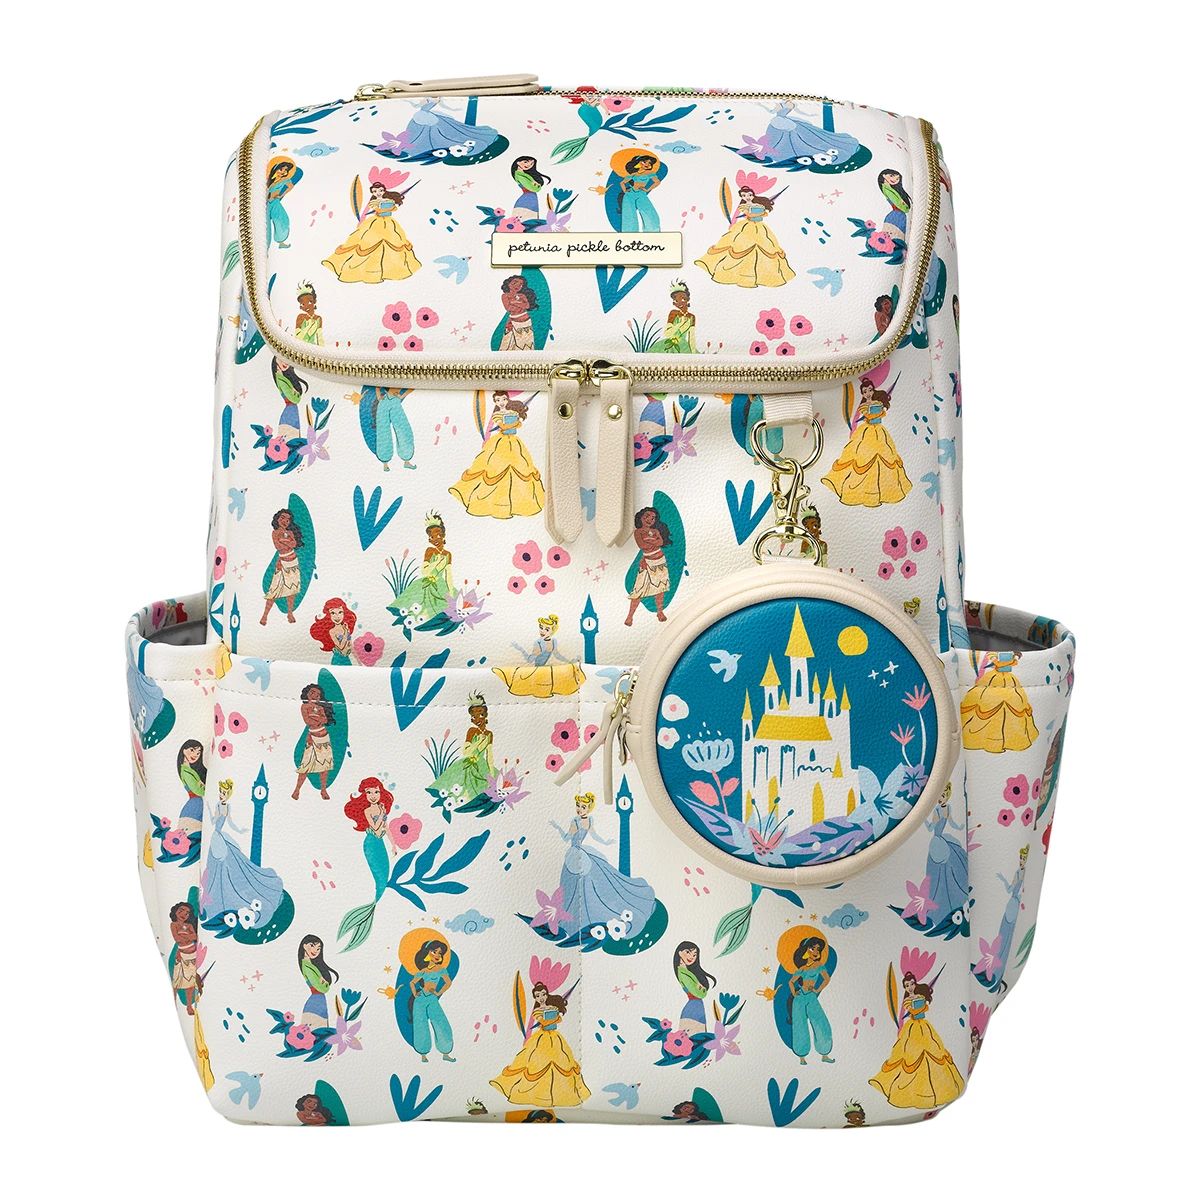 Method Backpack in Disney Princess Courage & Kindness | Petunia Pickle Bottom